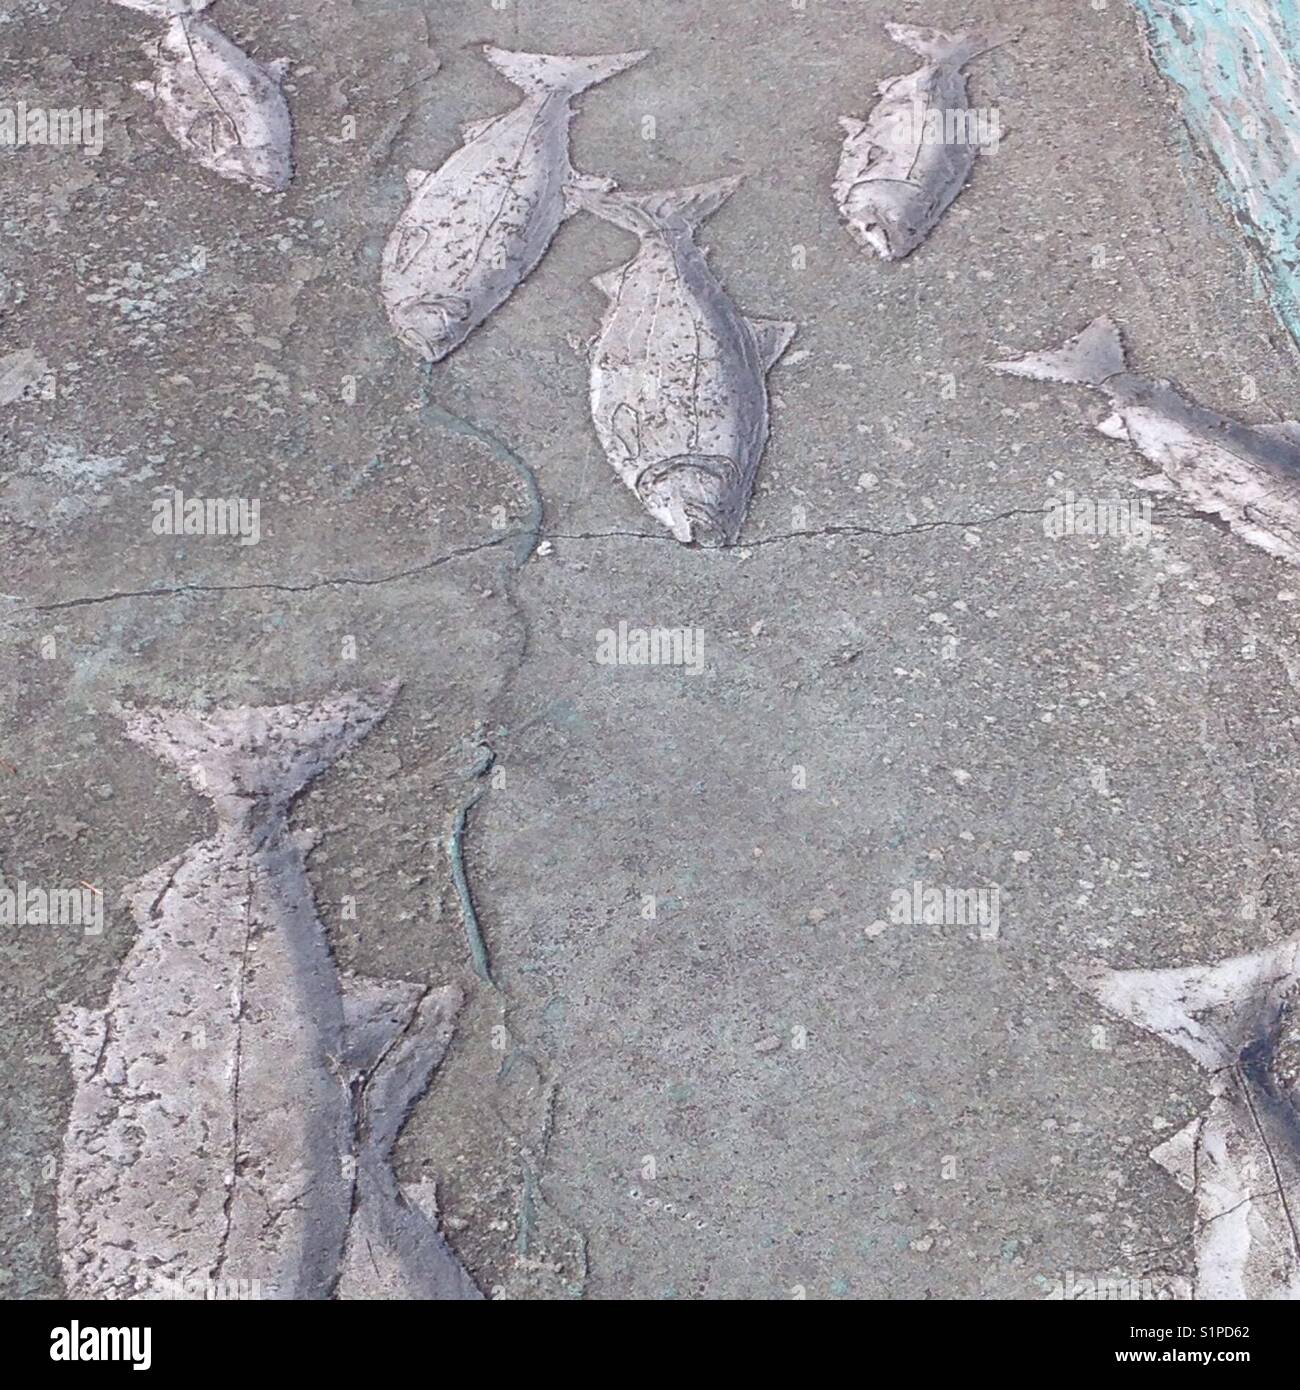 Salmon images on a sidewalk in Olympia, Washington, USA Stock Photo